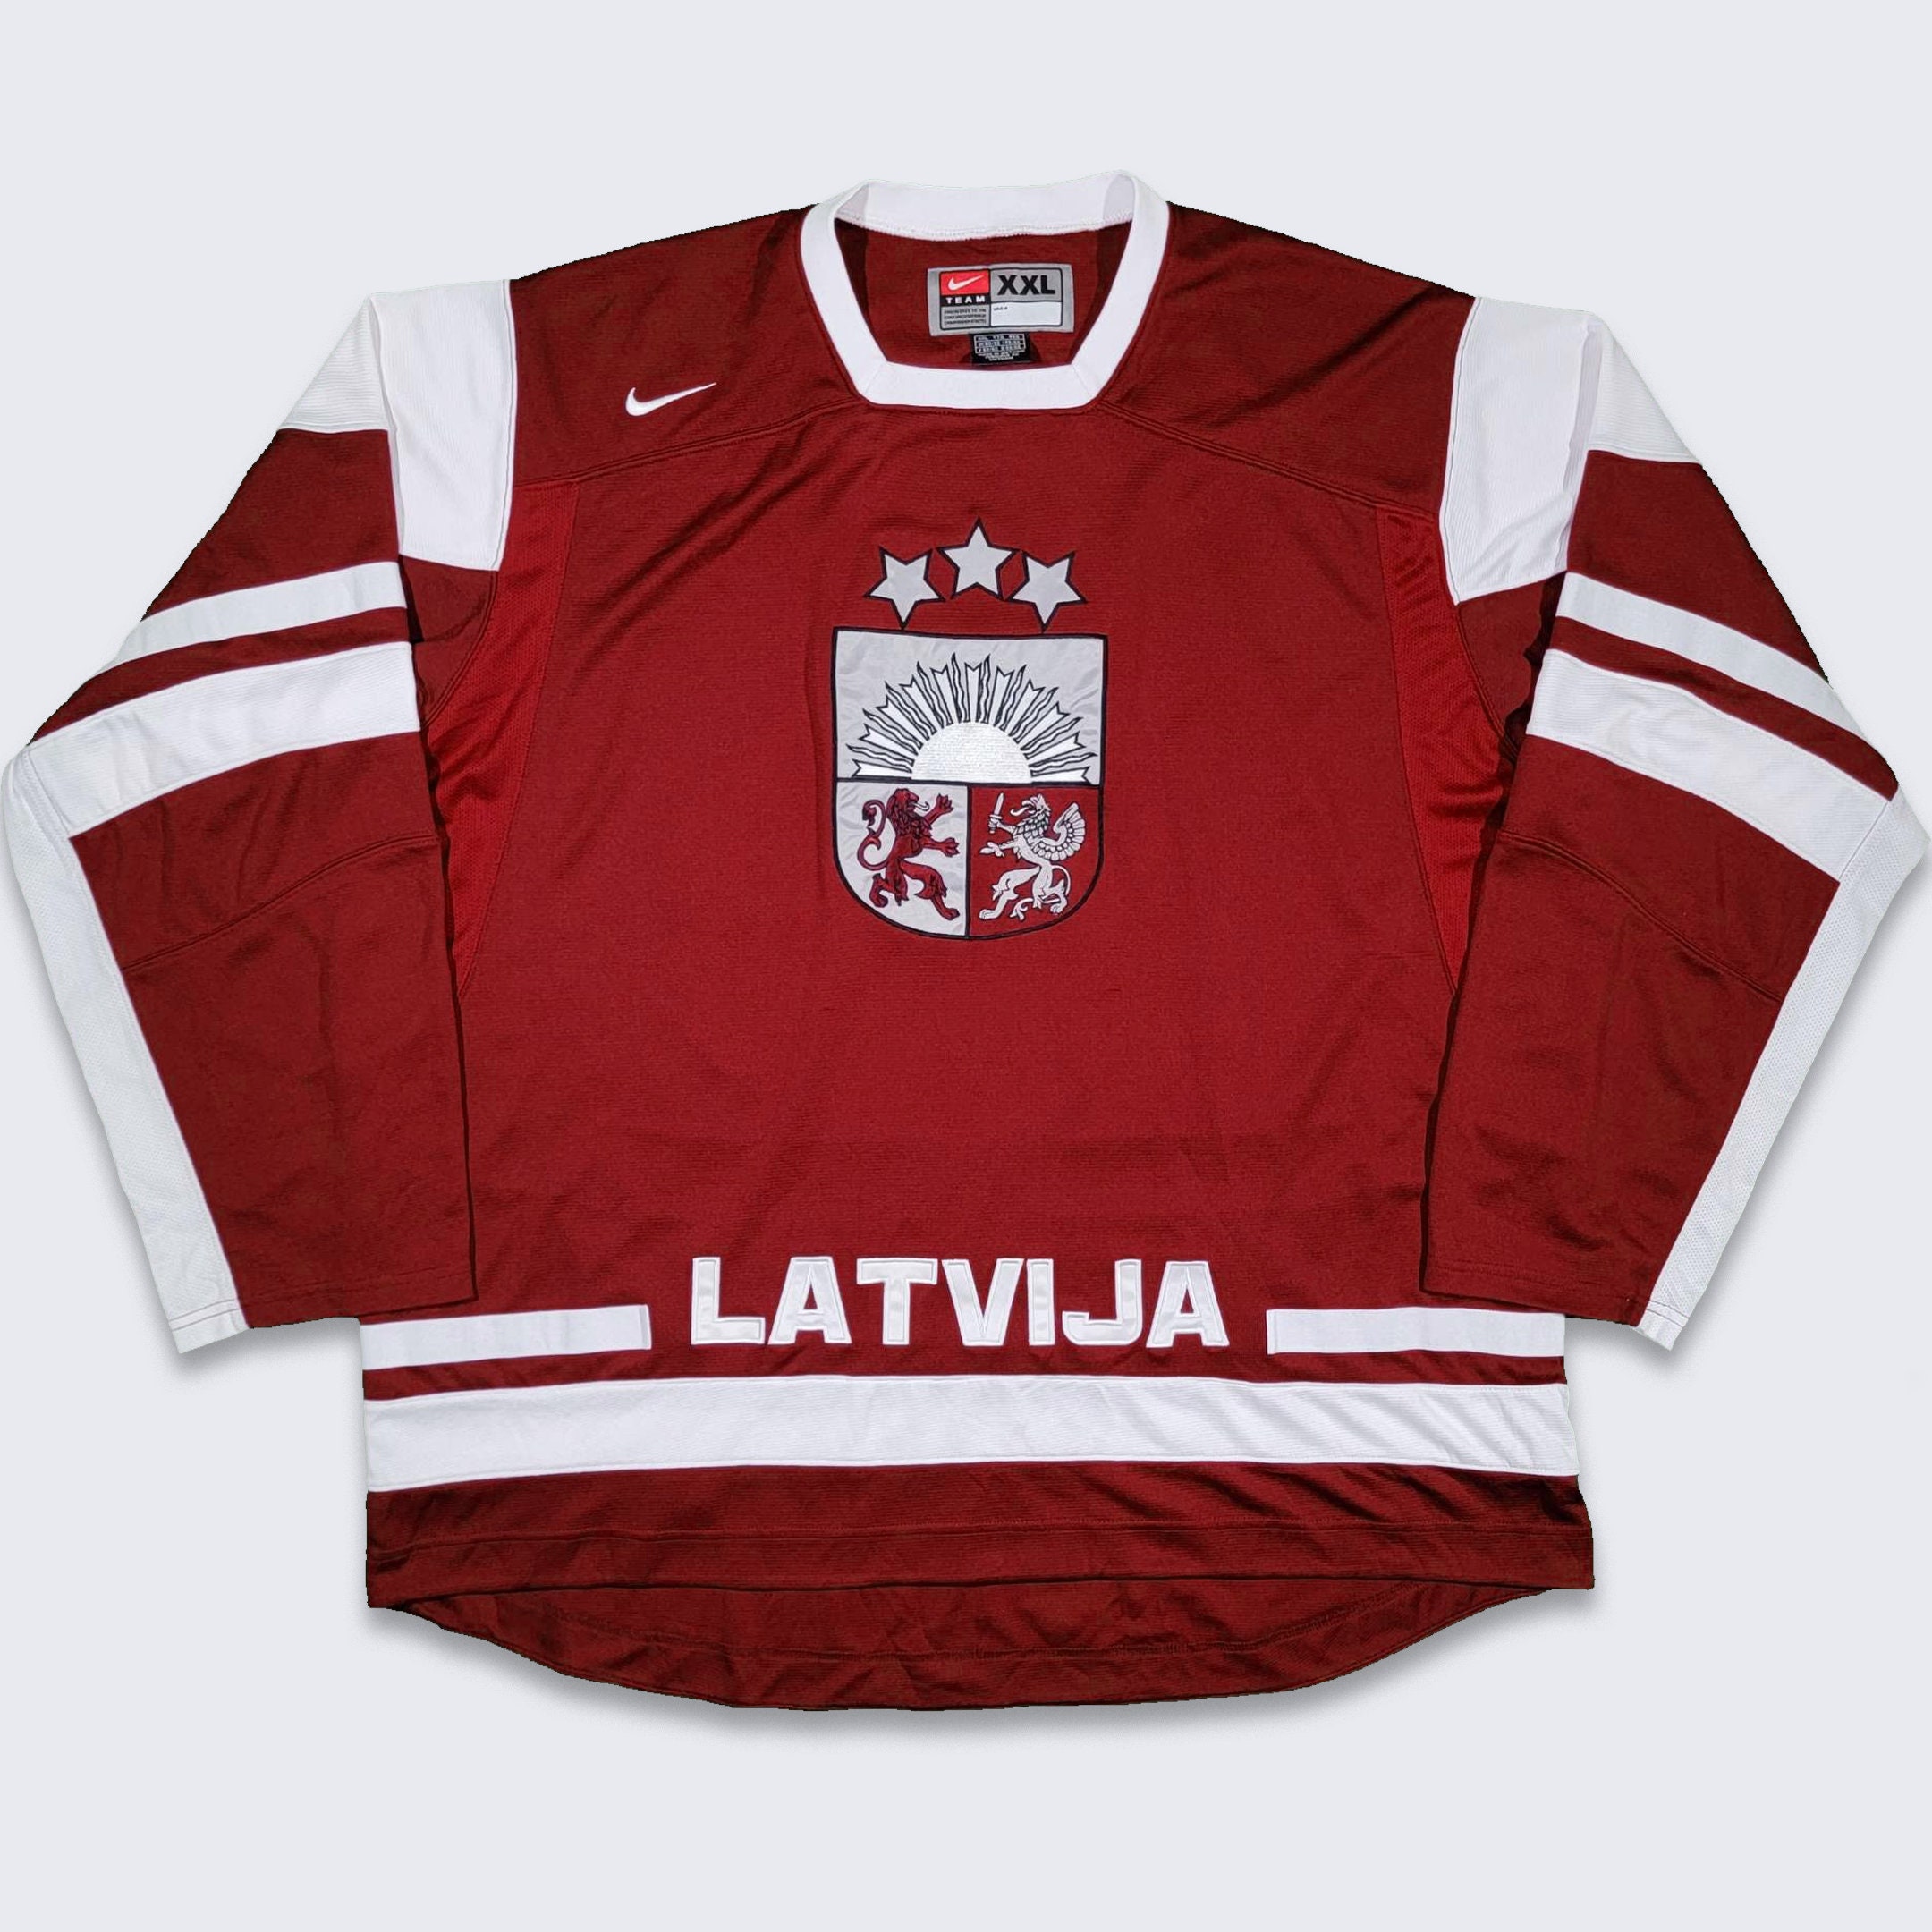 Latvia Vintage Nike IIHF Hockey Jersey Stitched on